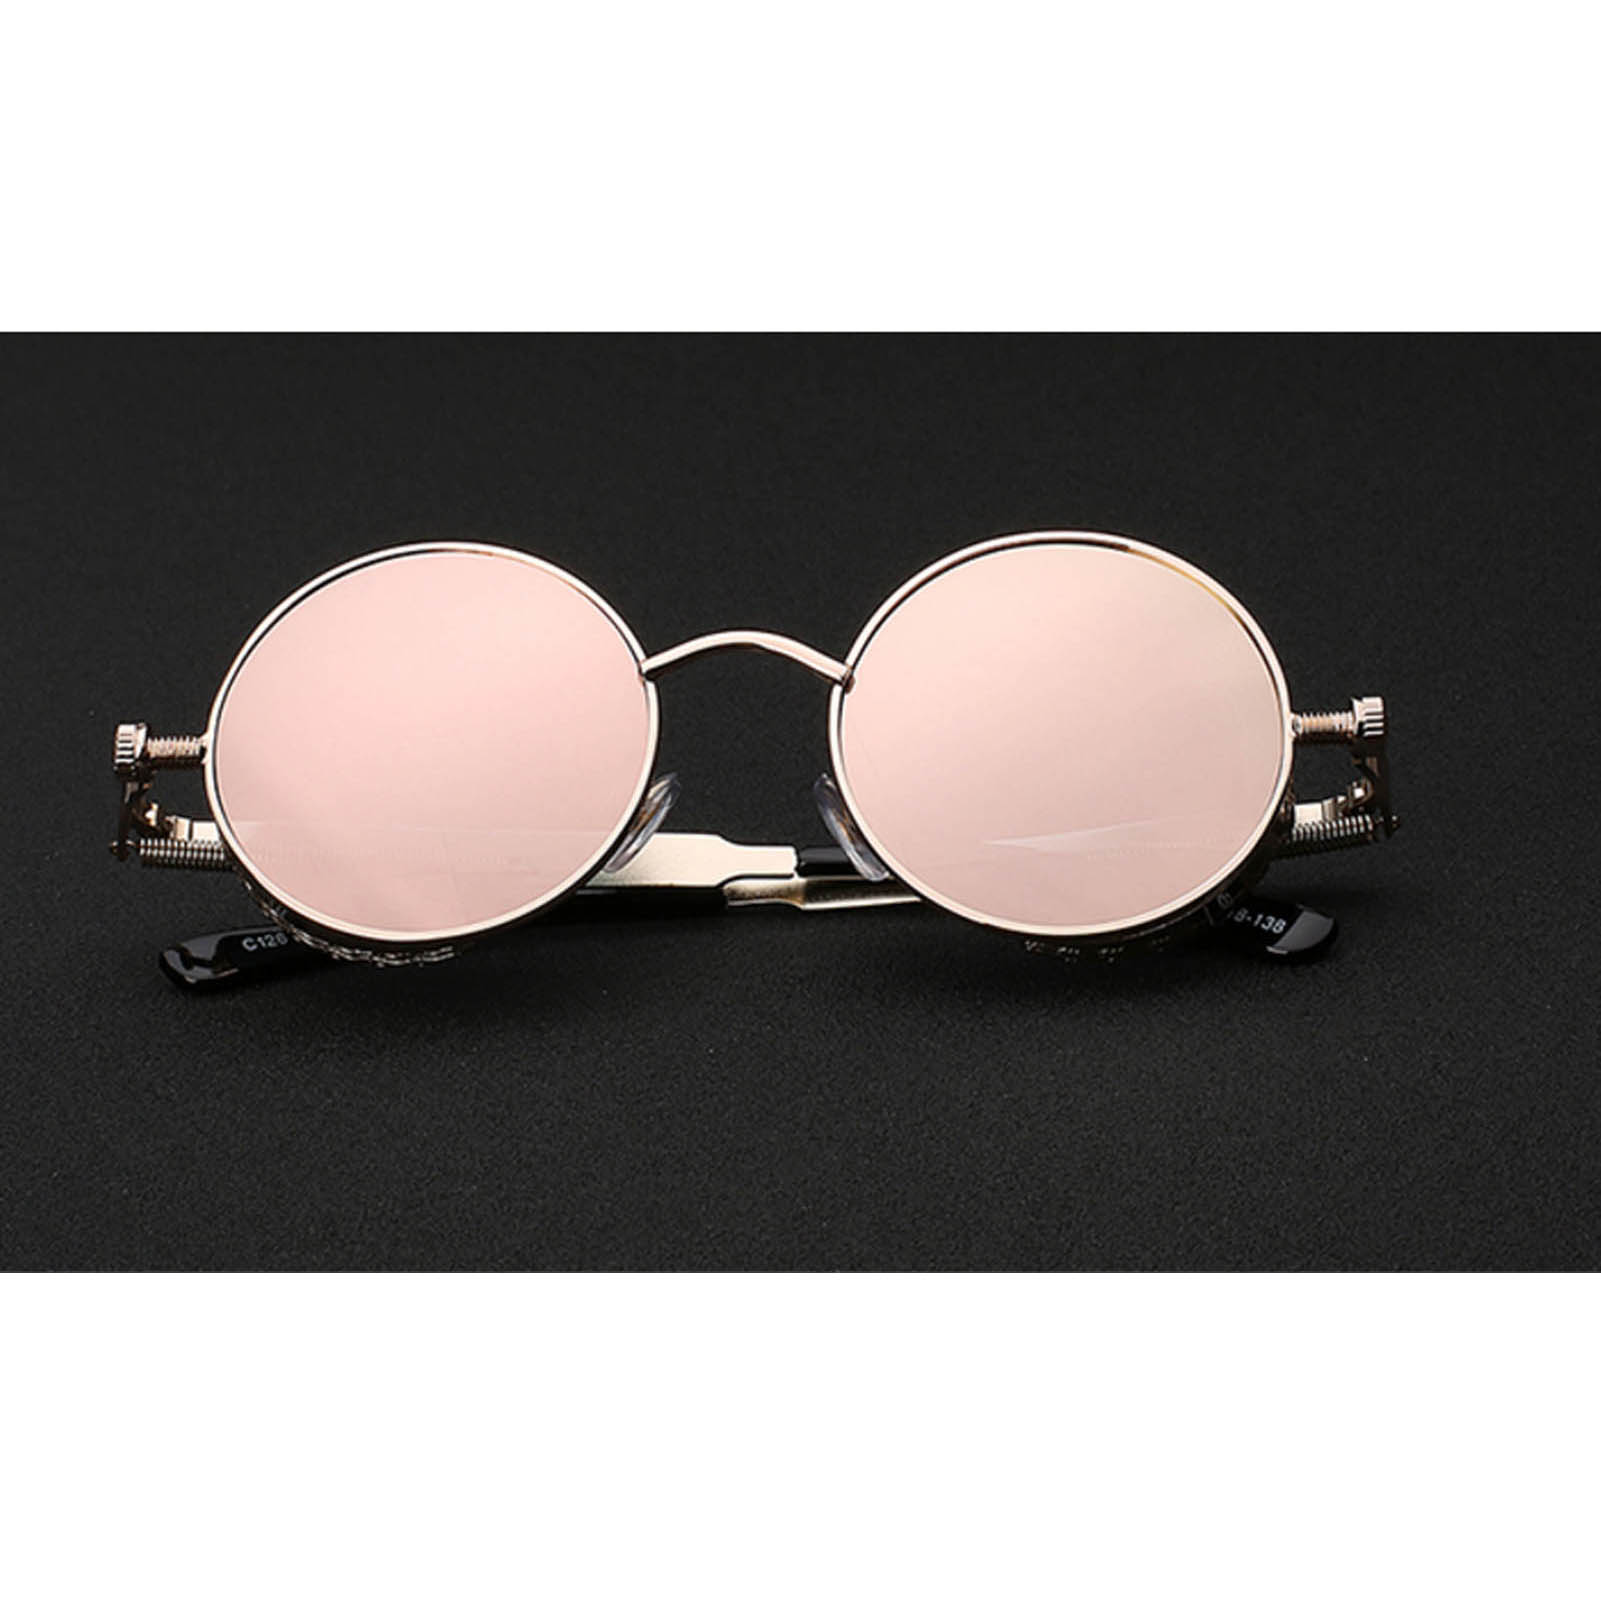 060 C3 Steampunk Gothic Sunglasses Metal Round Circle Gold Frame Pink Rose Mirror Lens One Pair